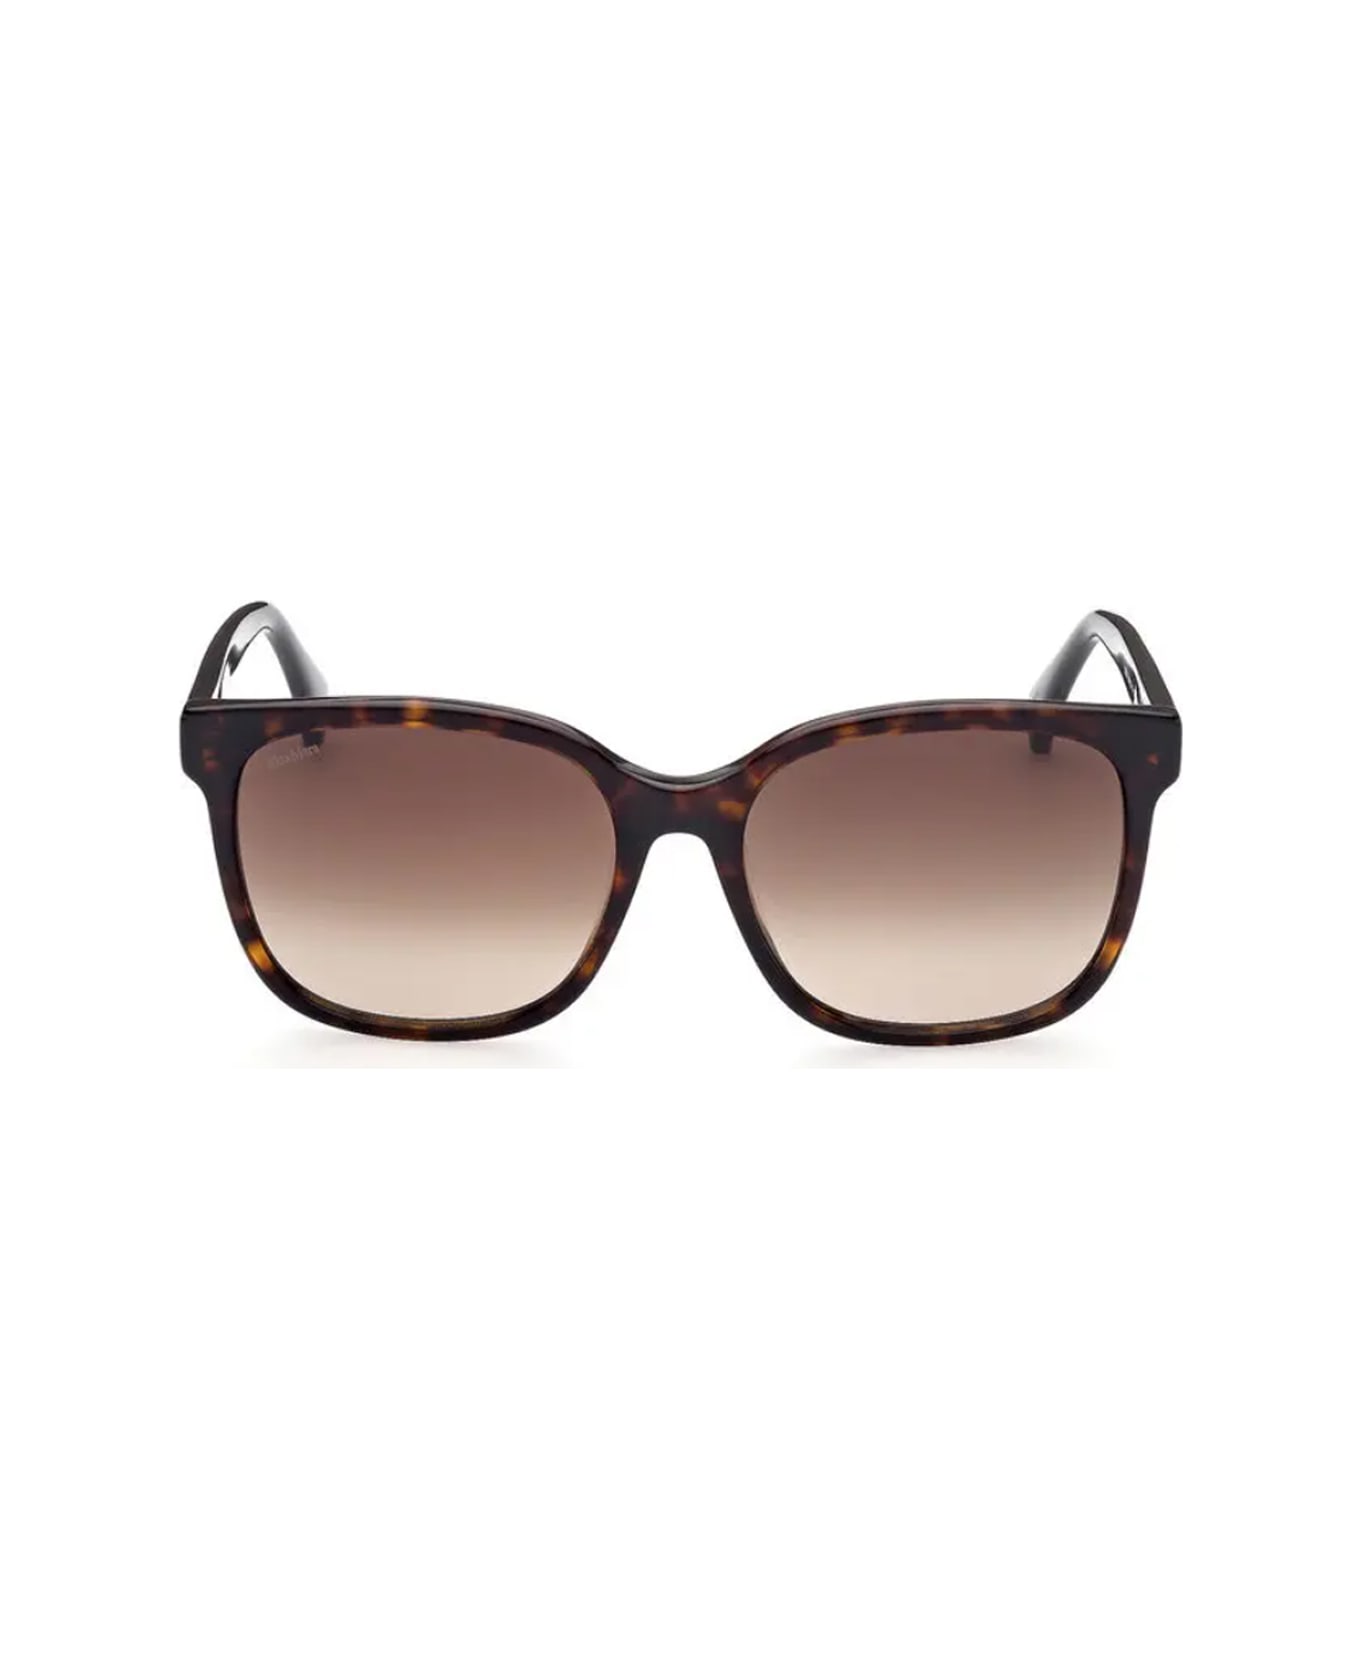 Max Mara Mm0025 Sunglasses - Marrone サングラス